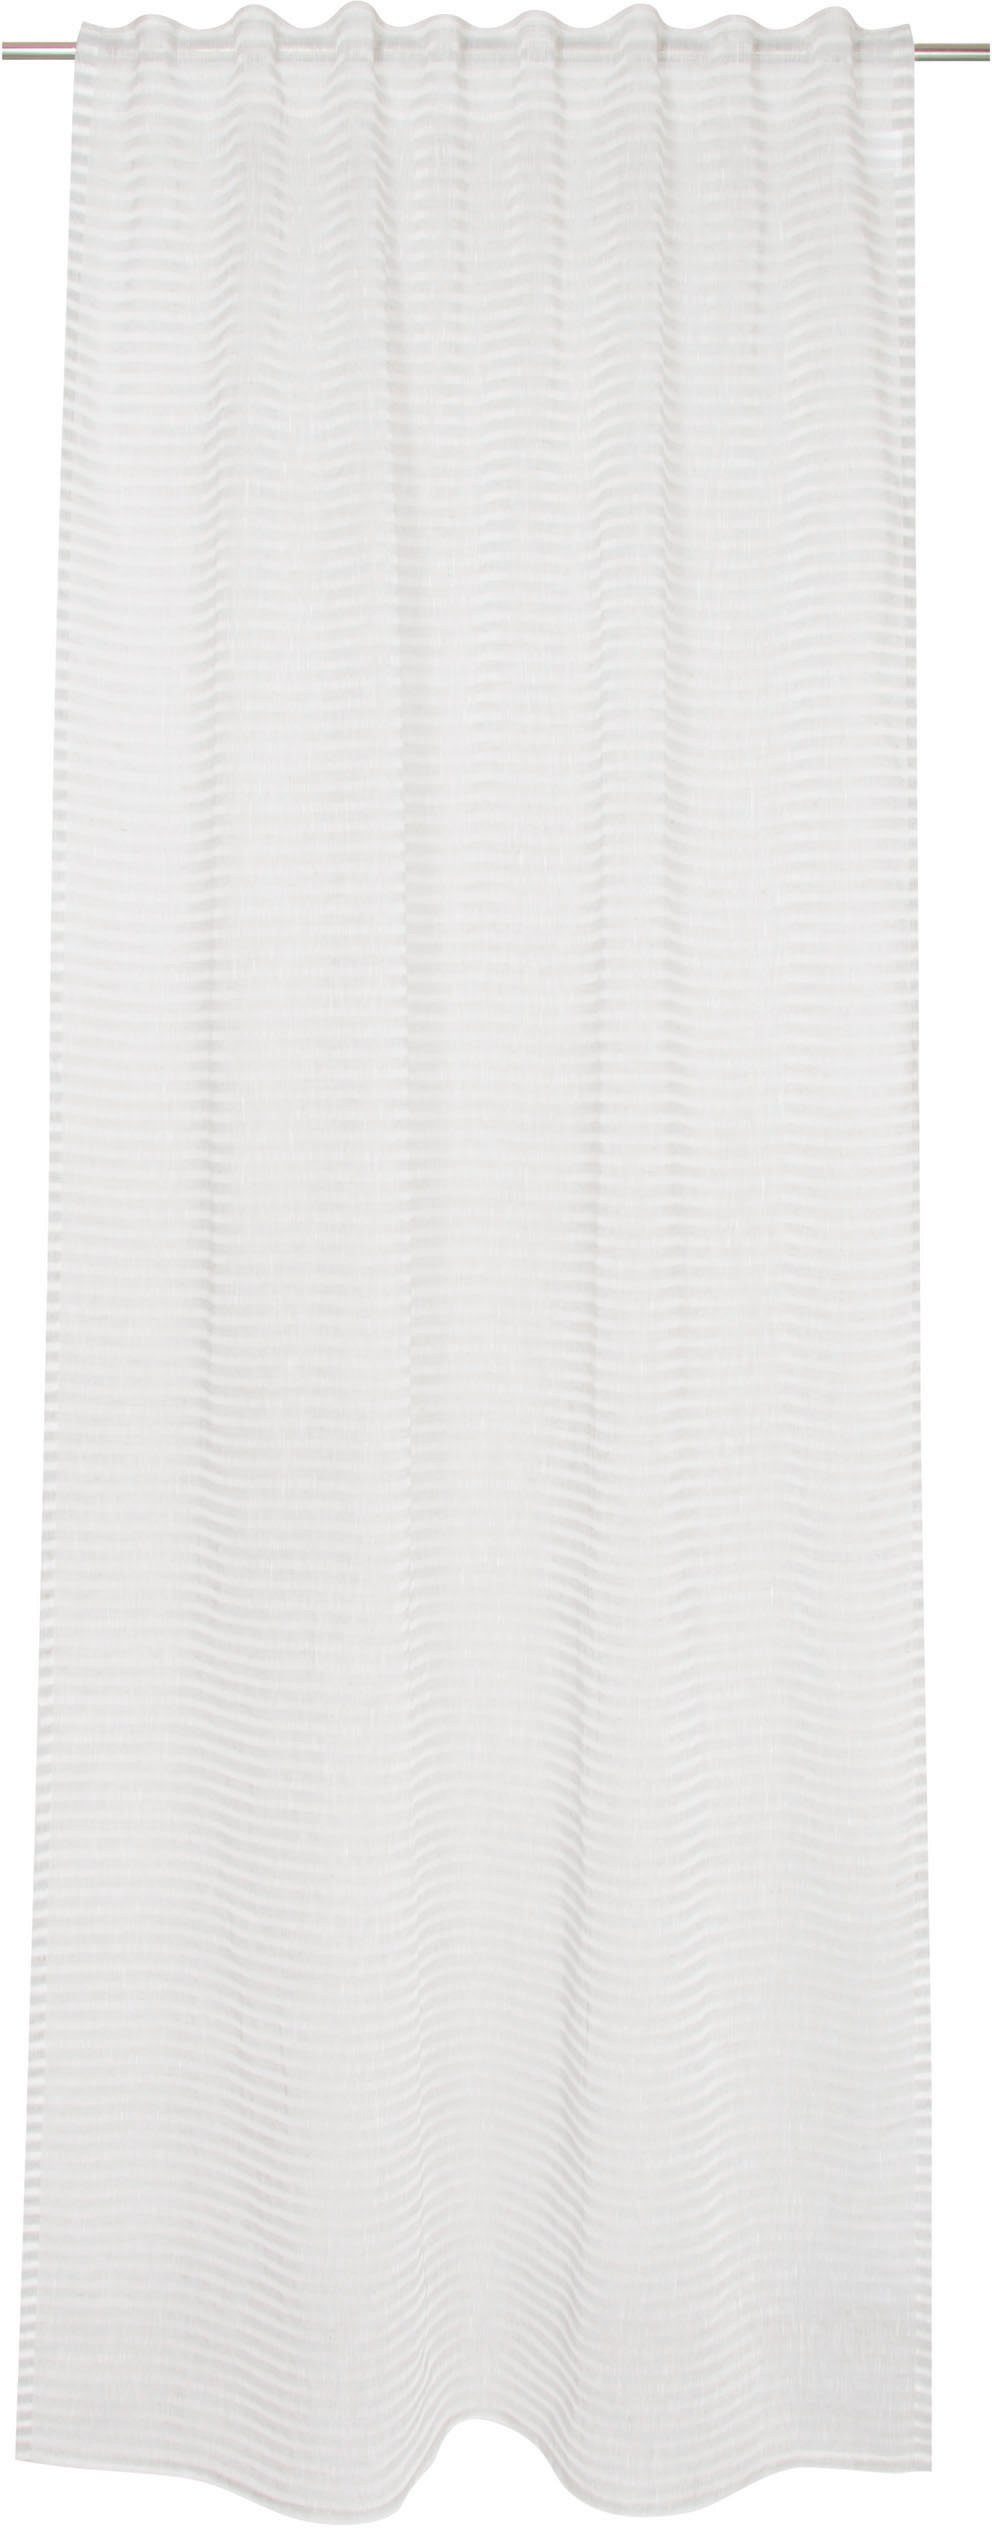 Vorhang Natural Stripe, TOM TAILOR HOME, verdeckte Schlaufen (1 St), transparent, transparent grau | Fertiggardinen